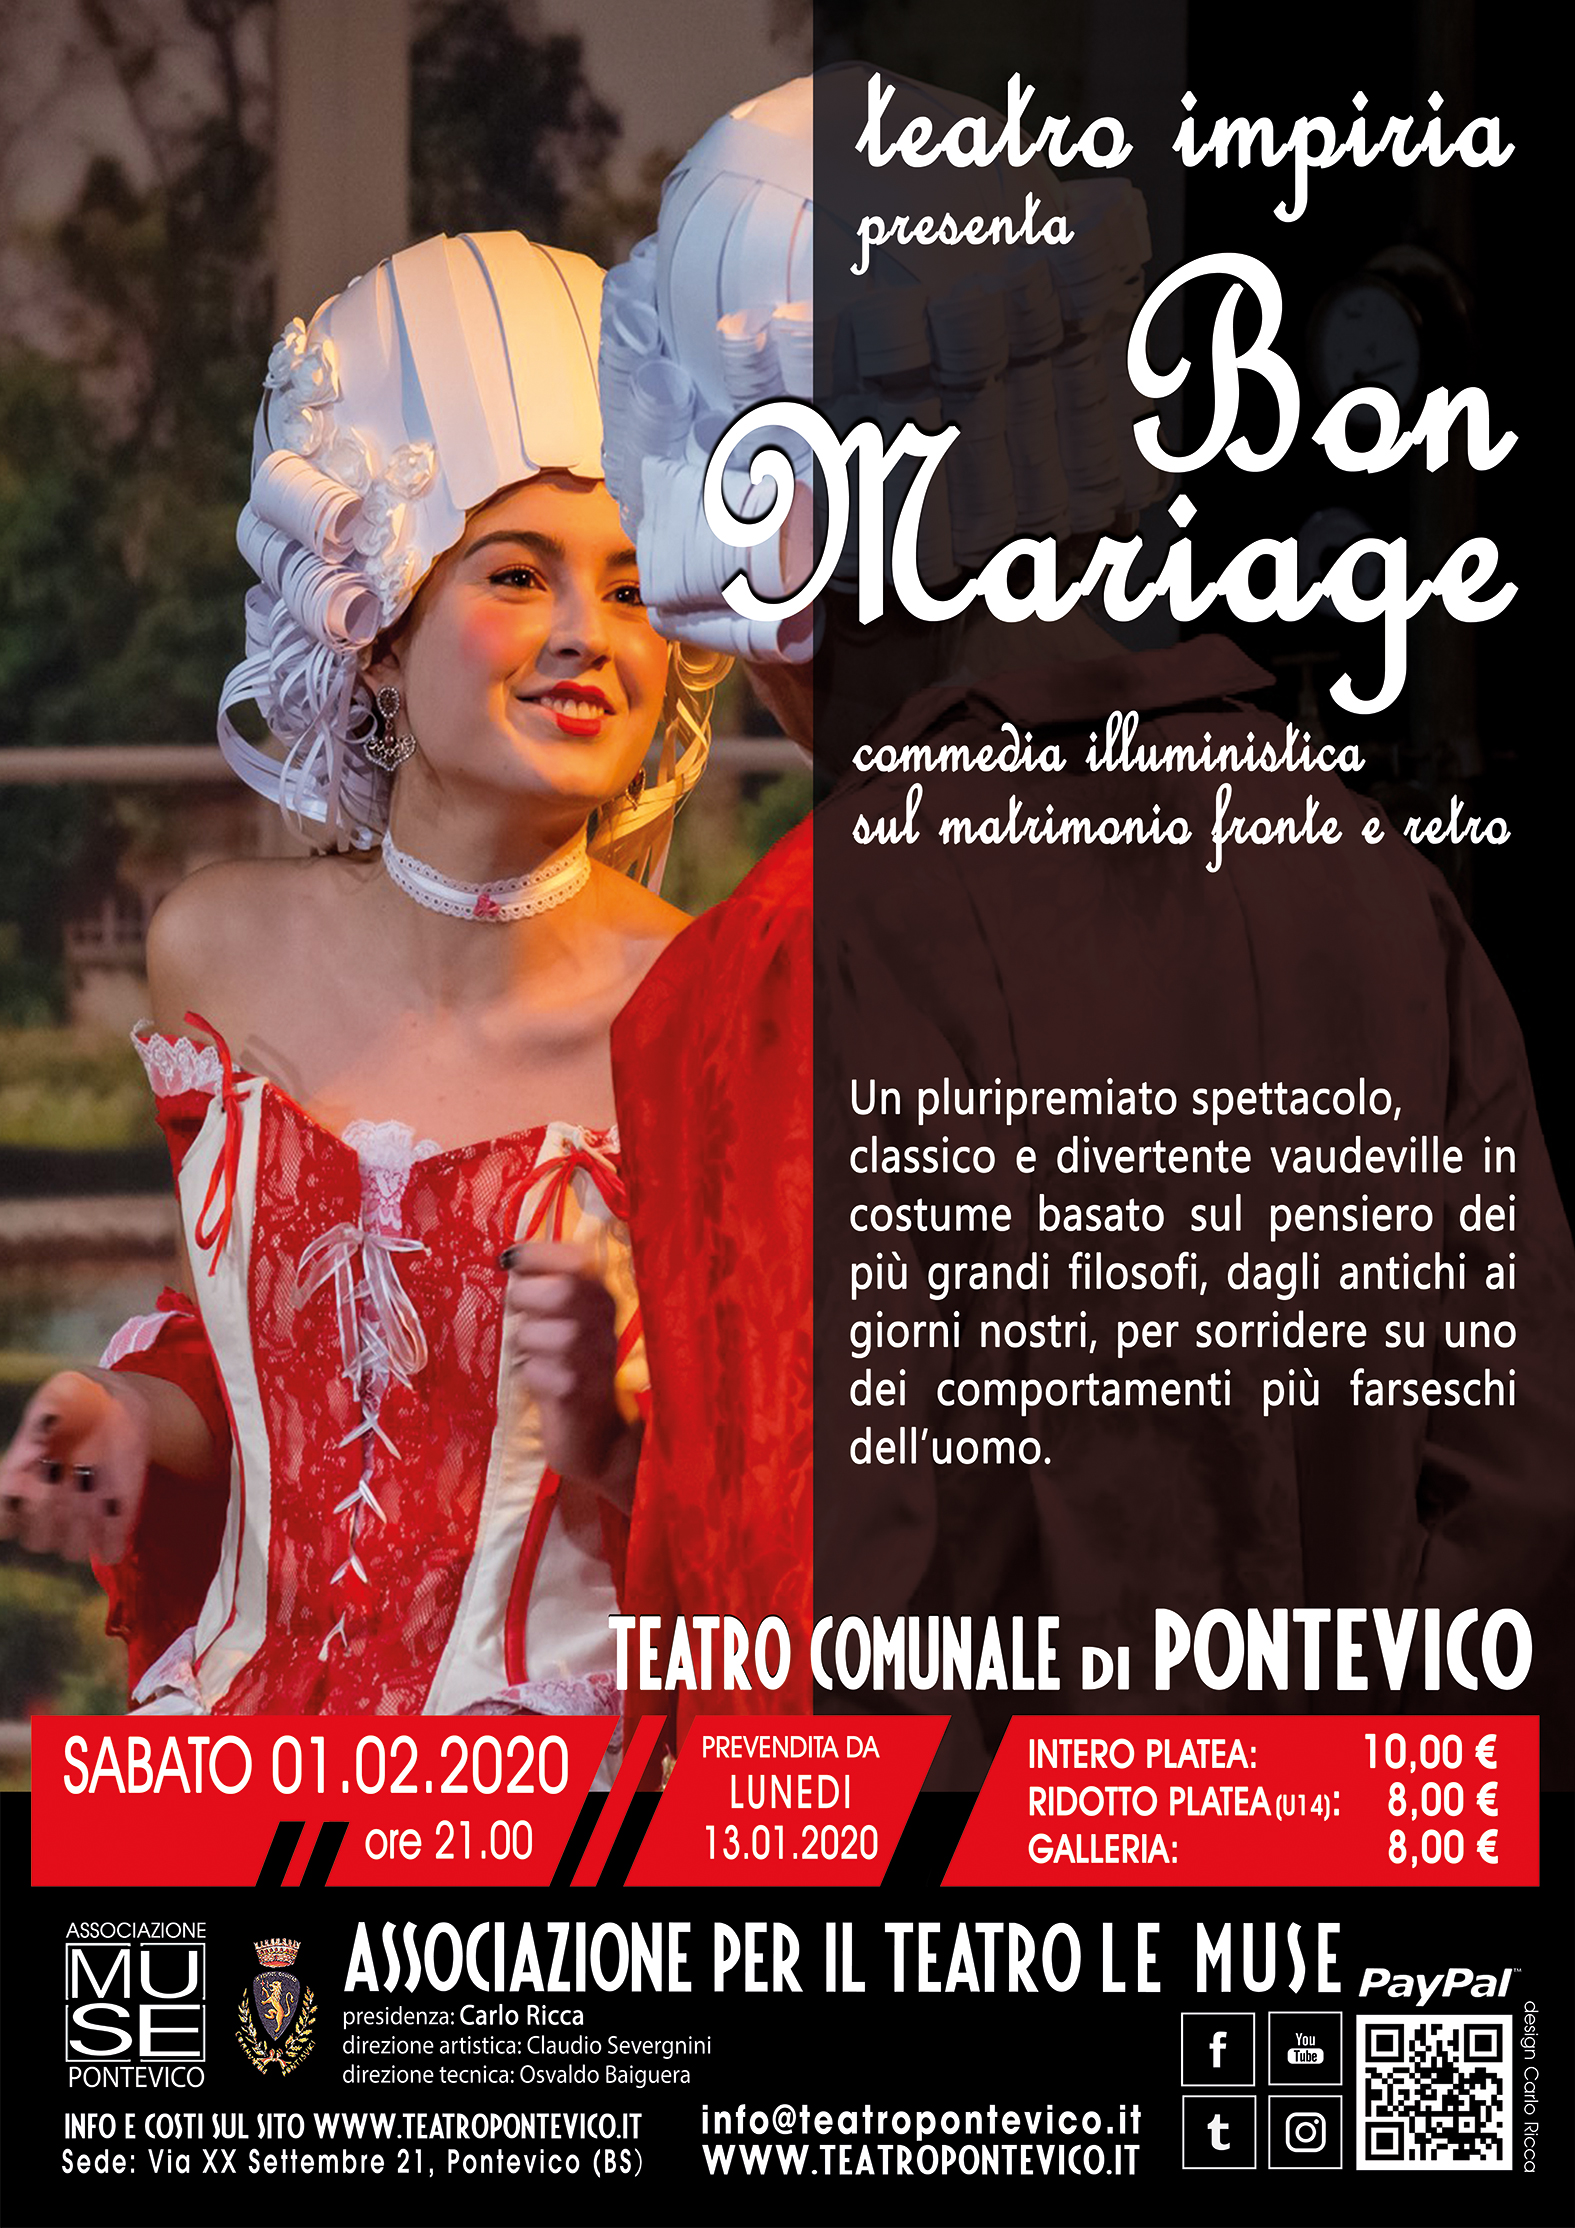 BON MARIAGE - TEATRO COMUNALE DI PONTEVICO